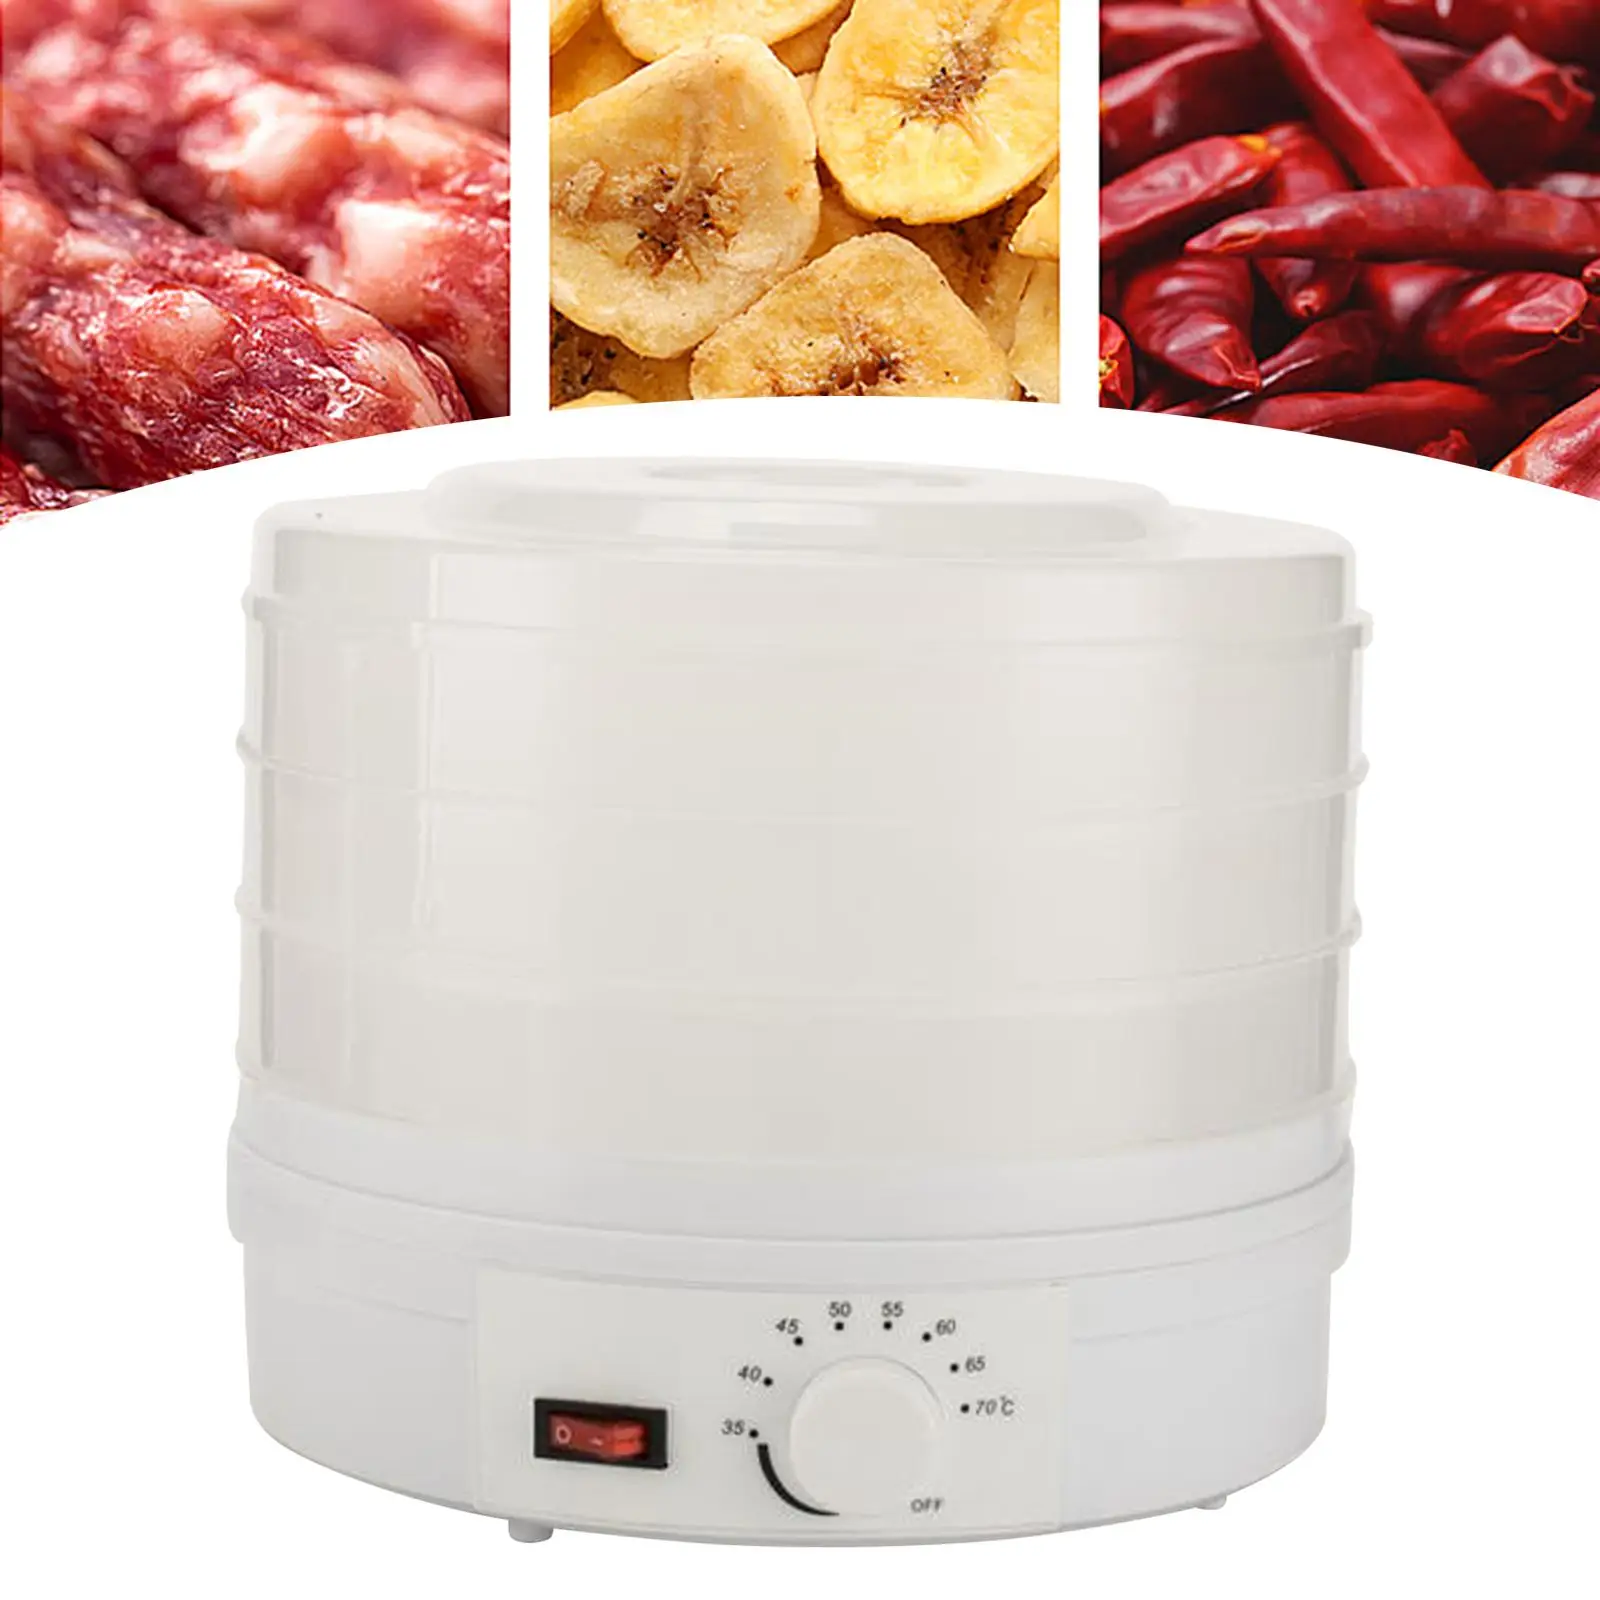 Food Fruit Dryer Machine 3 Layer High Capacity Durable Portable 110V Vegetable Dryer for Pet Meats Vegetable Kitchen